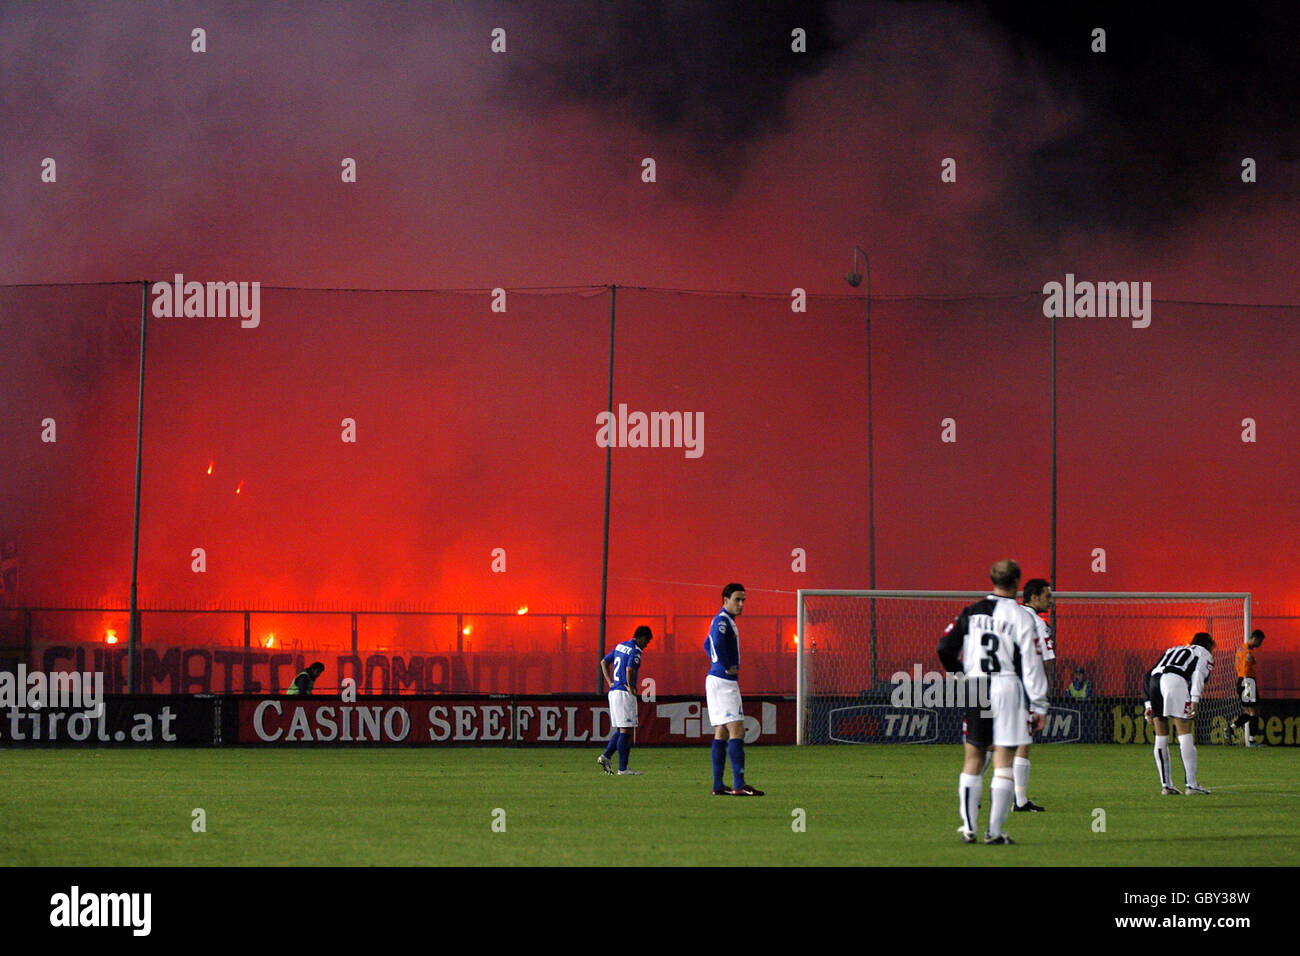 Soccer - Italian Serie A - Brescia v Siena. Siena fans set off flares at the Stadio Comunale Mario Rigamonti Stock Photo